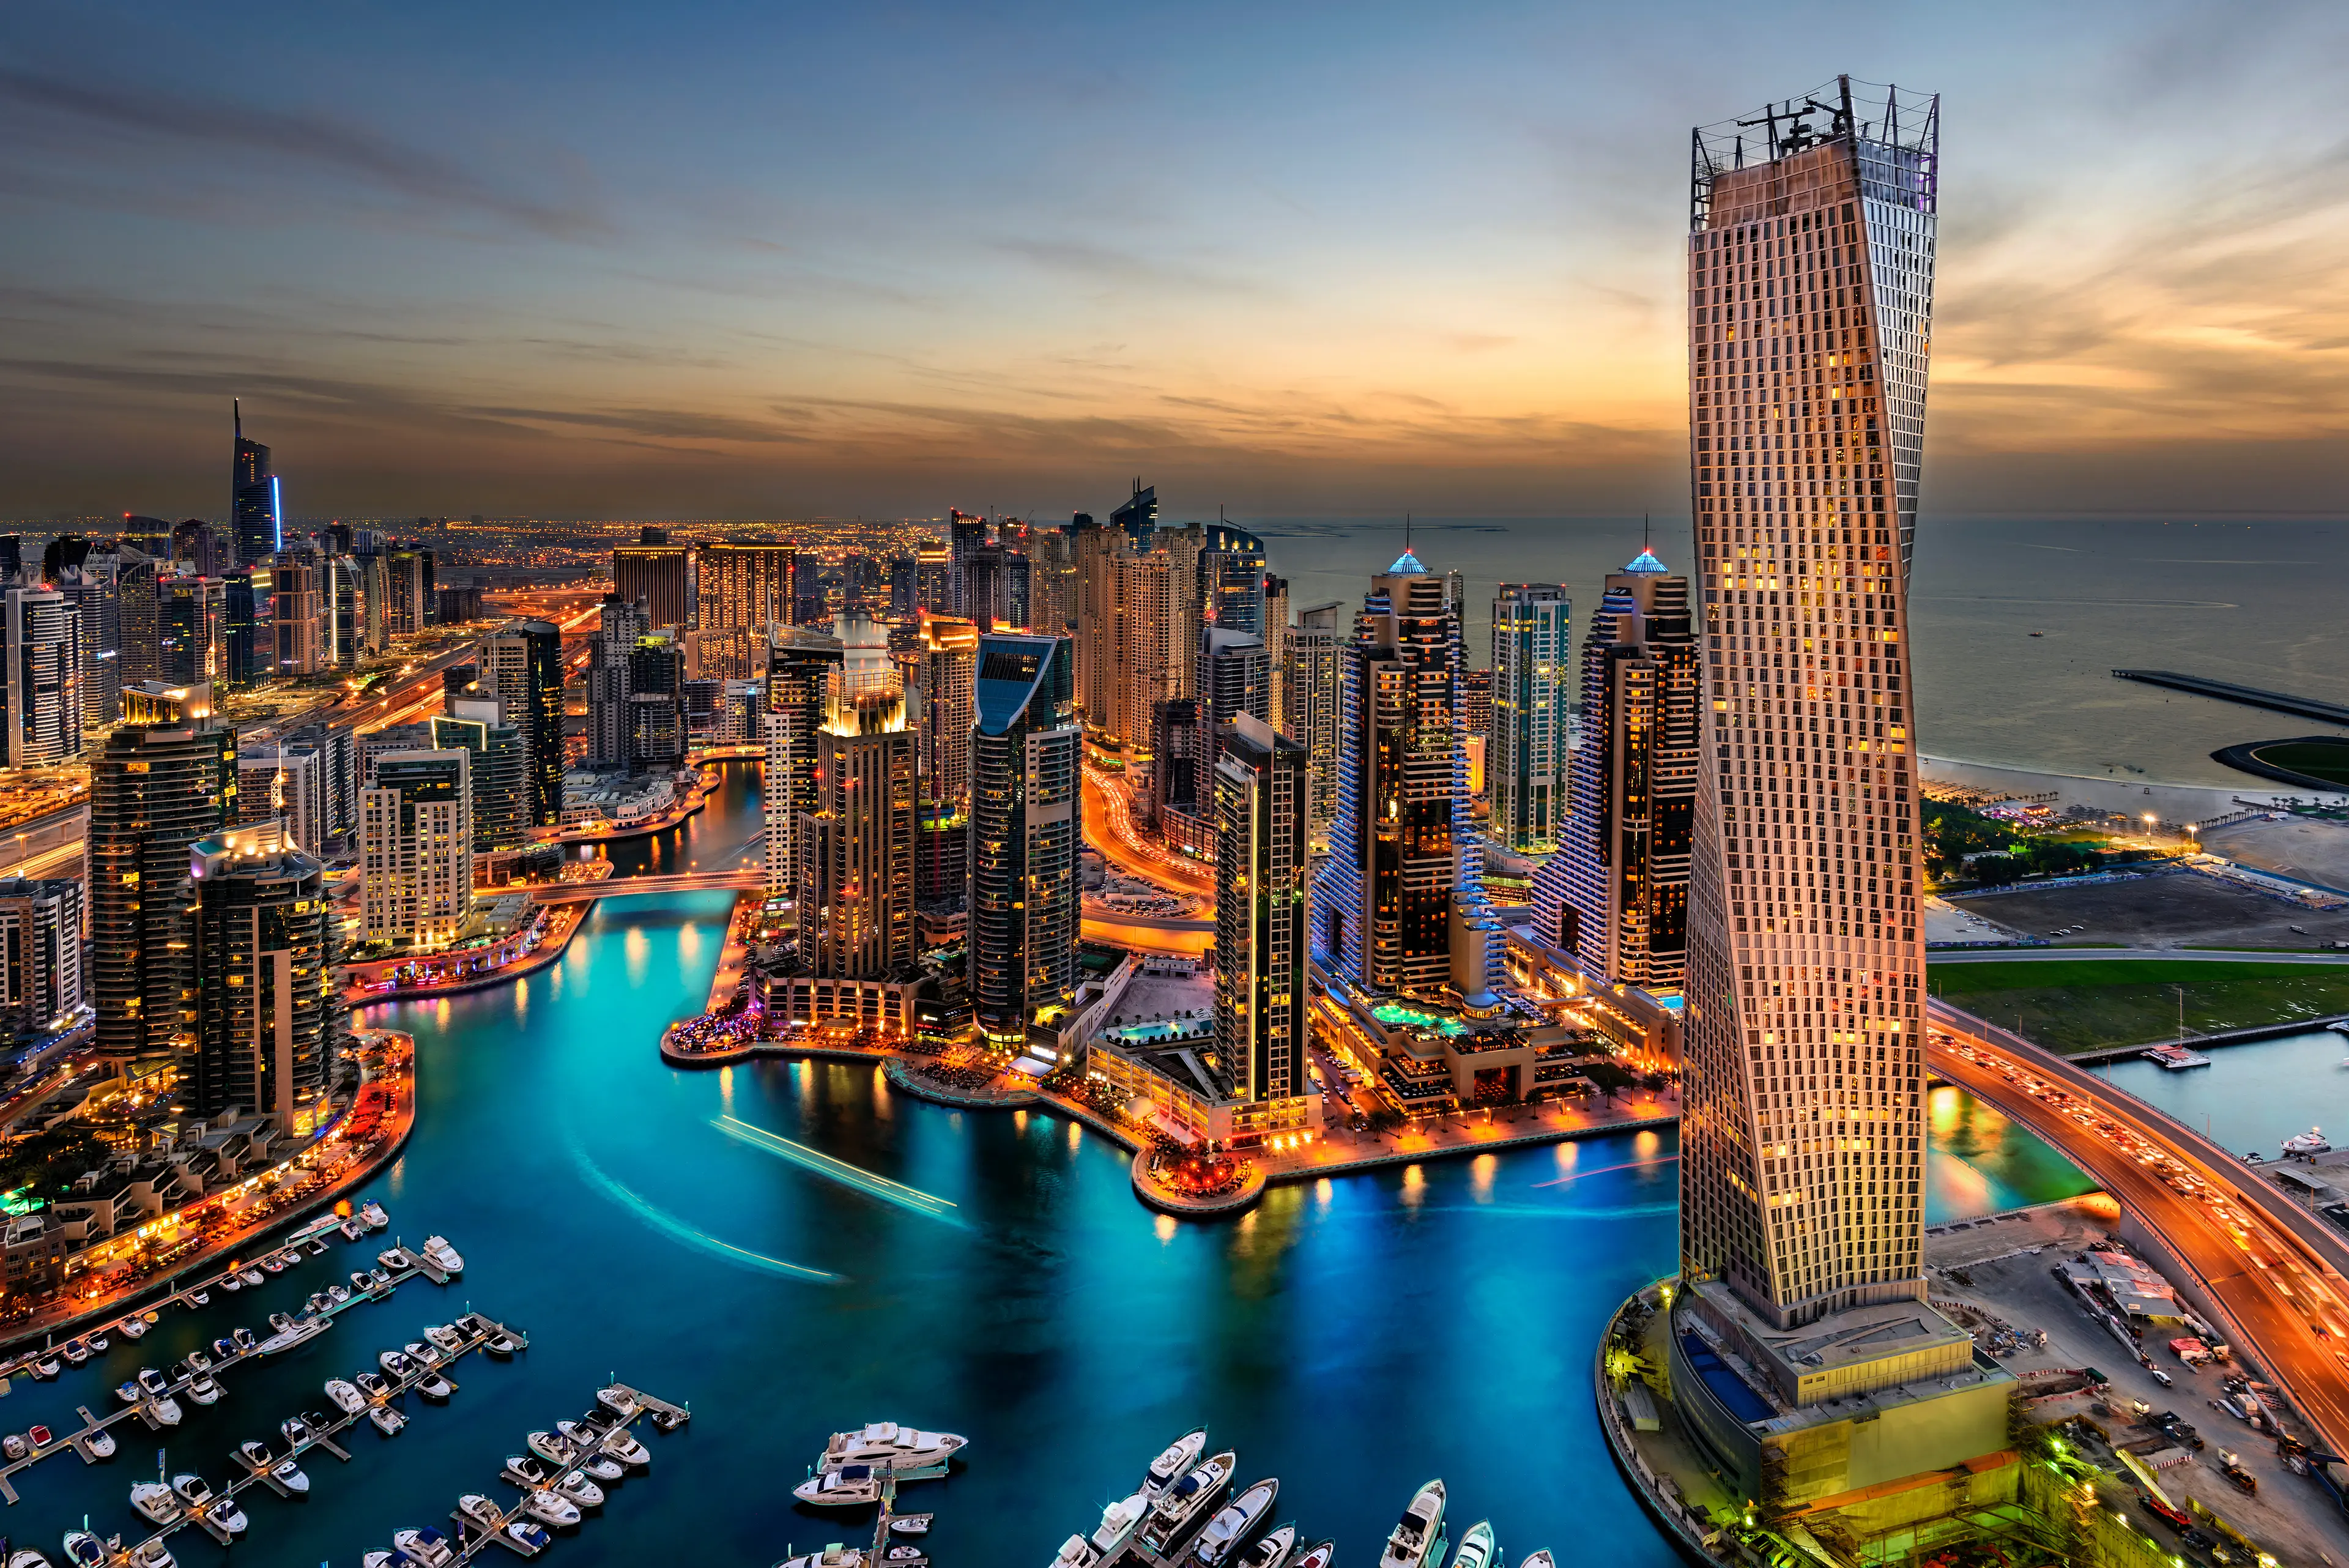 2-Day Exciting Dubai, United Arab Emirates Itinerary